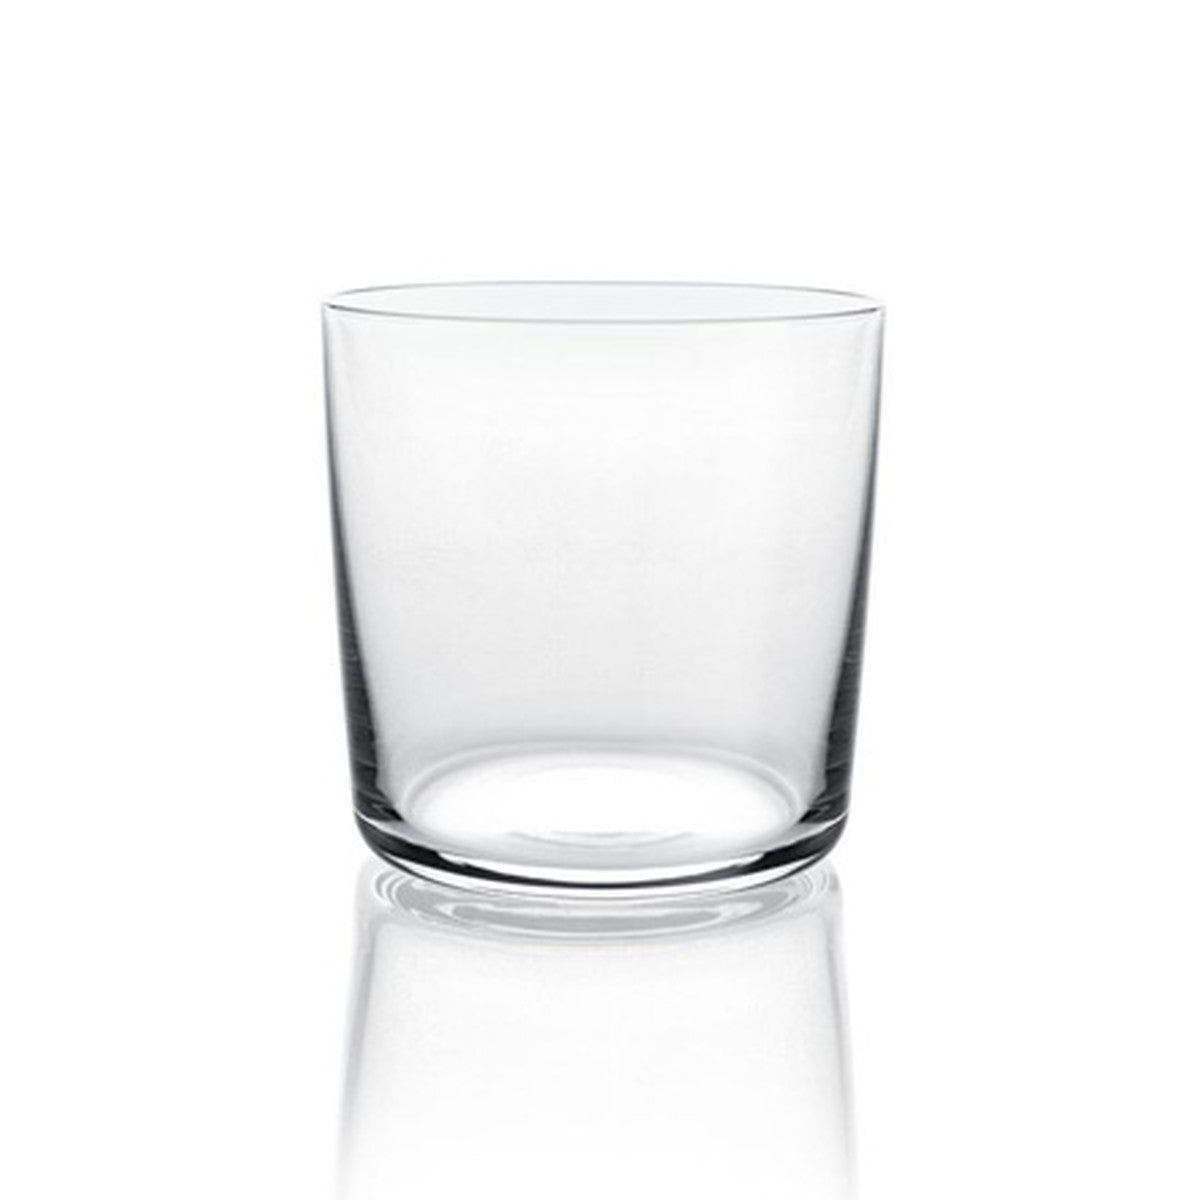 Jasper Morrison Water Glass (set of 4)